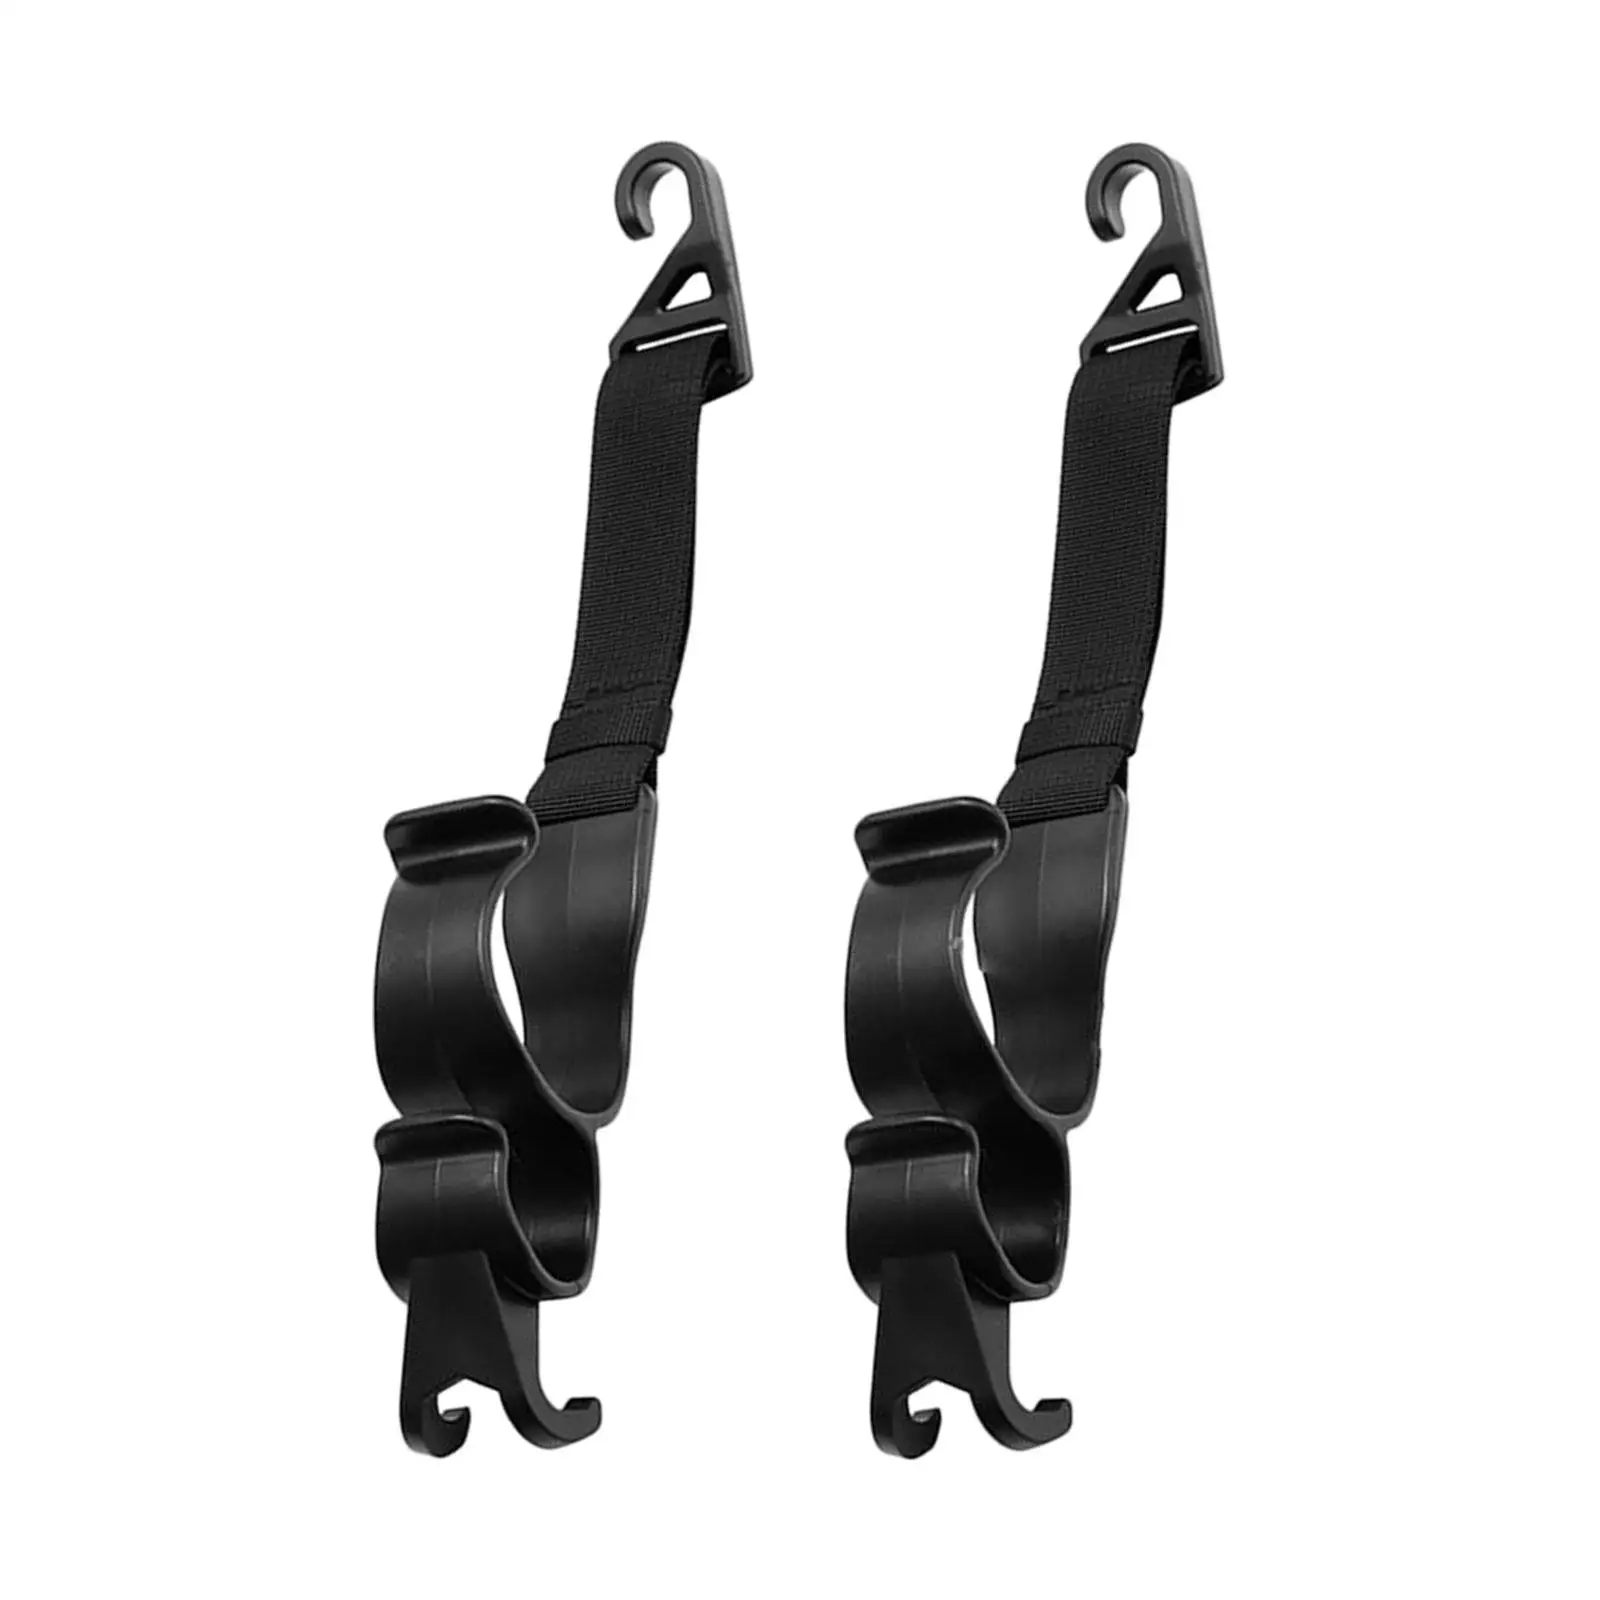 2x Adjustable Car Headrest Hooks Interior Accessories Storage Organizer Heavy Duty Headrest Hanger Hook for Umbrellas Coats